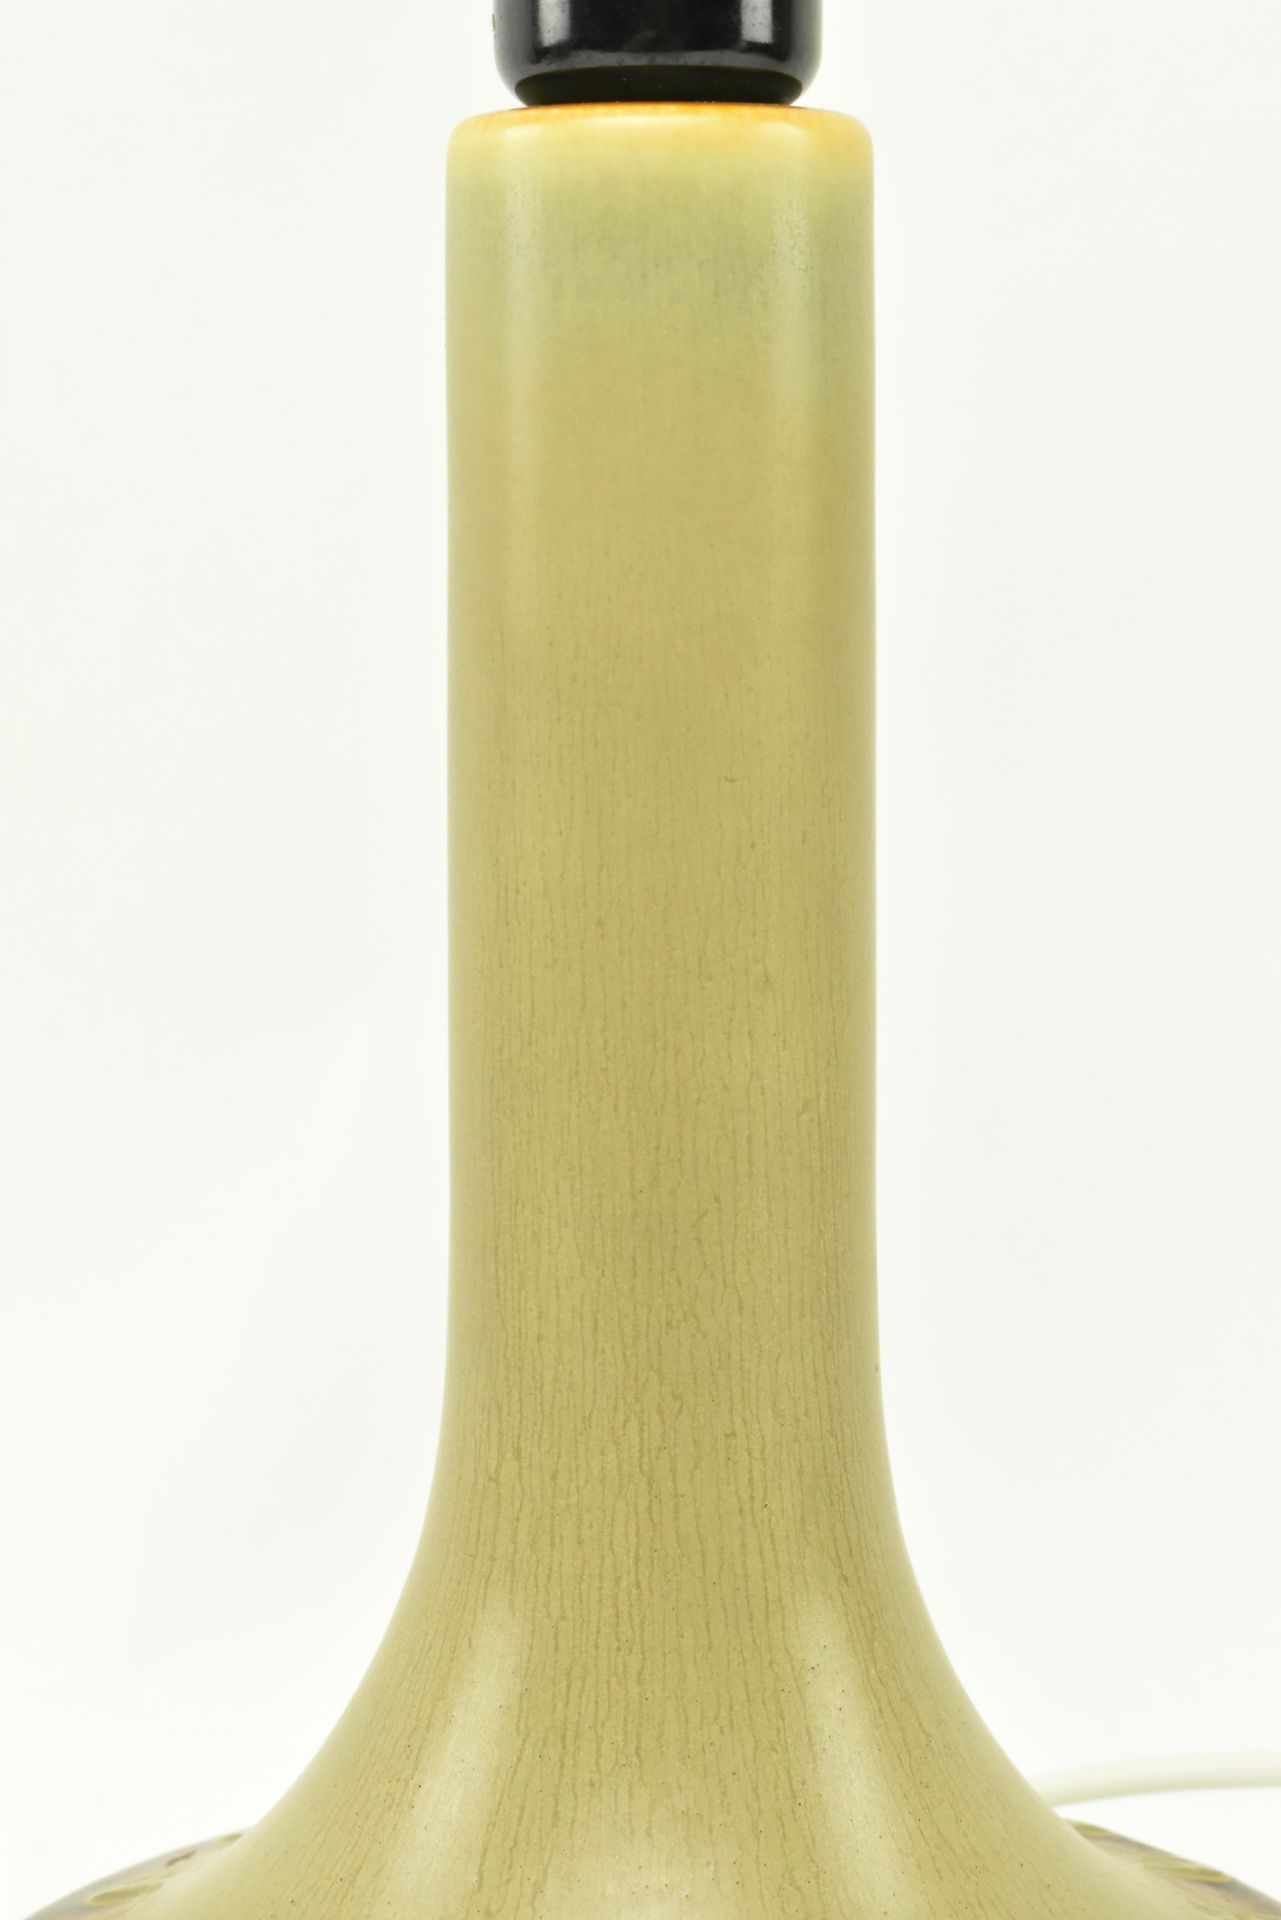 SOHOLM - MDI CENTURY DANISH DESIGNER TABLE LAMP - Image 3 of 5